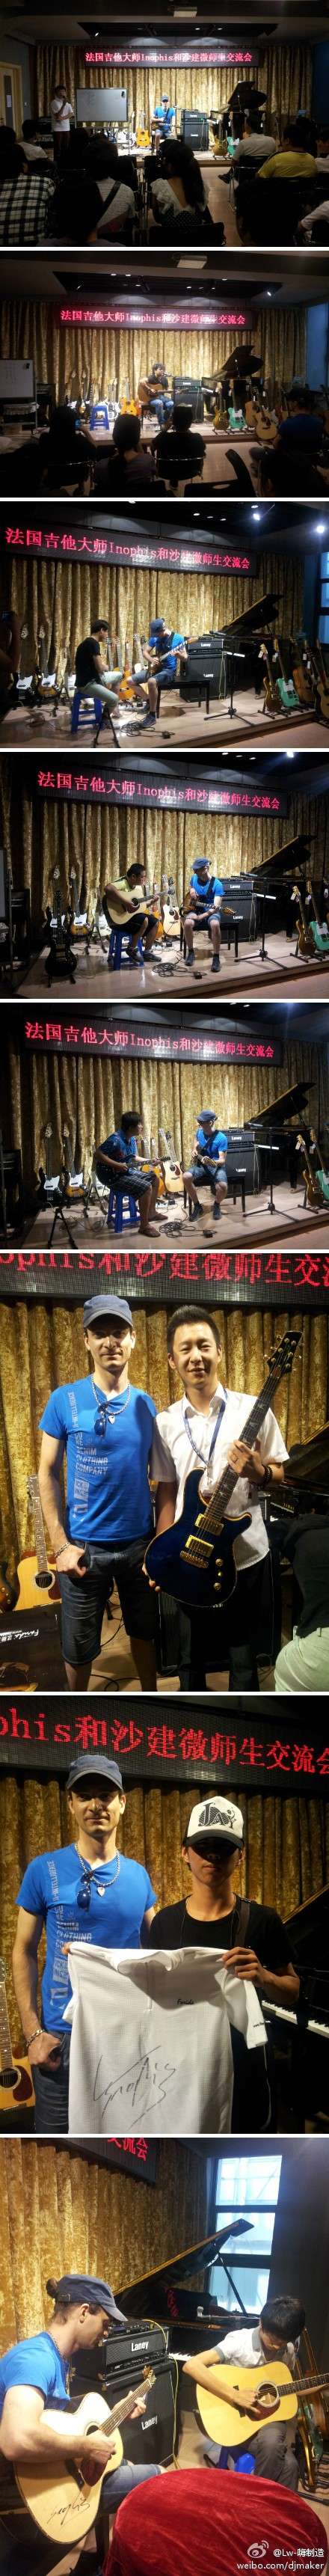 Retour de Shenyang - Inophis China tour 2012 Shenya10